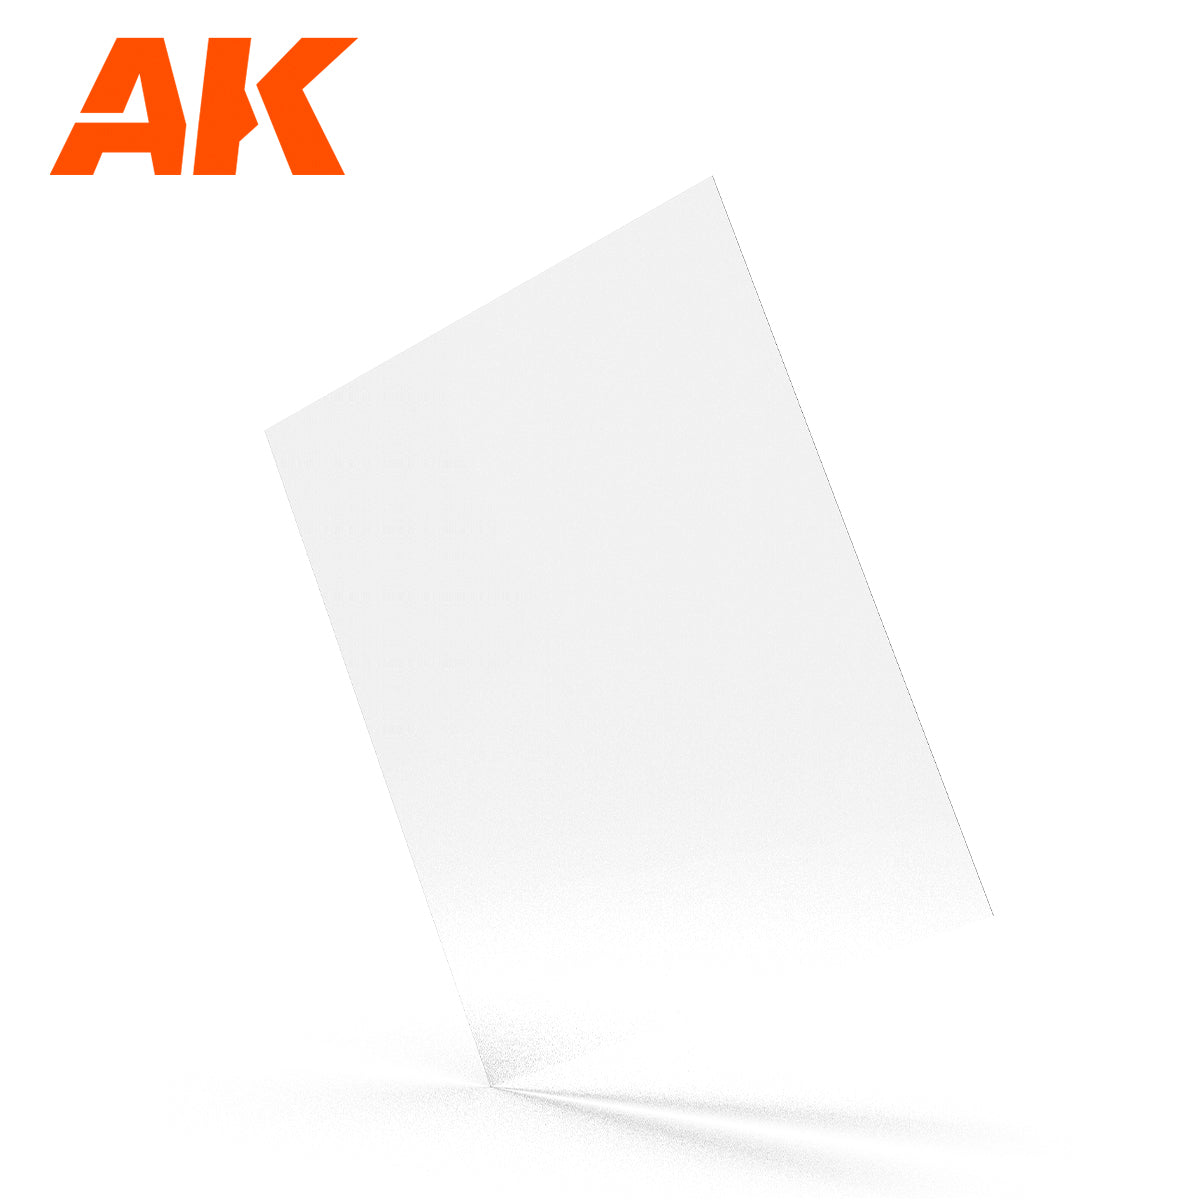 AK6578 - Styrene sheet - 2mm thickness x 245 x 195mm